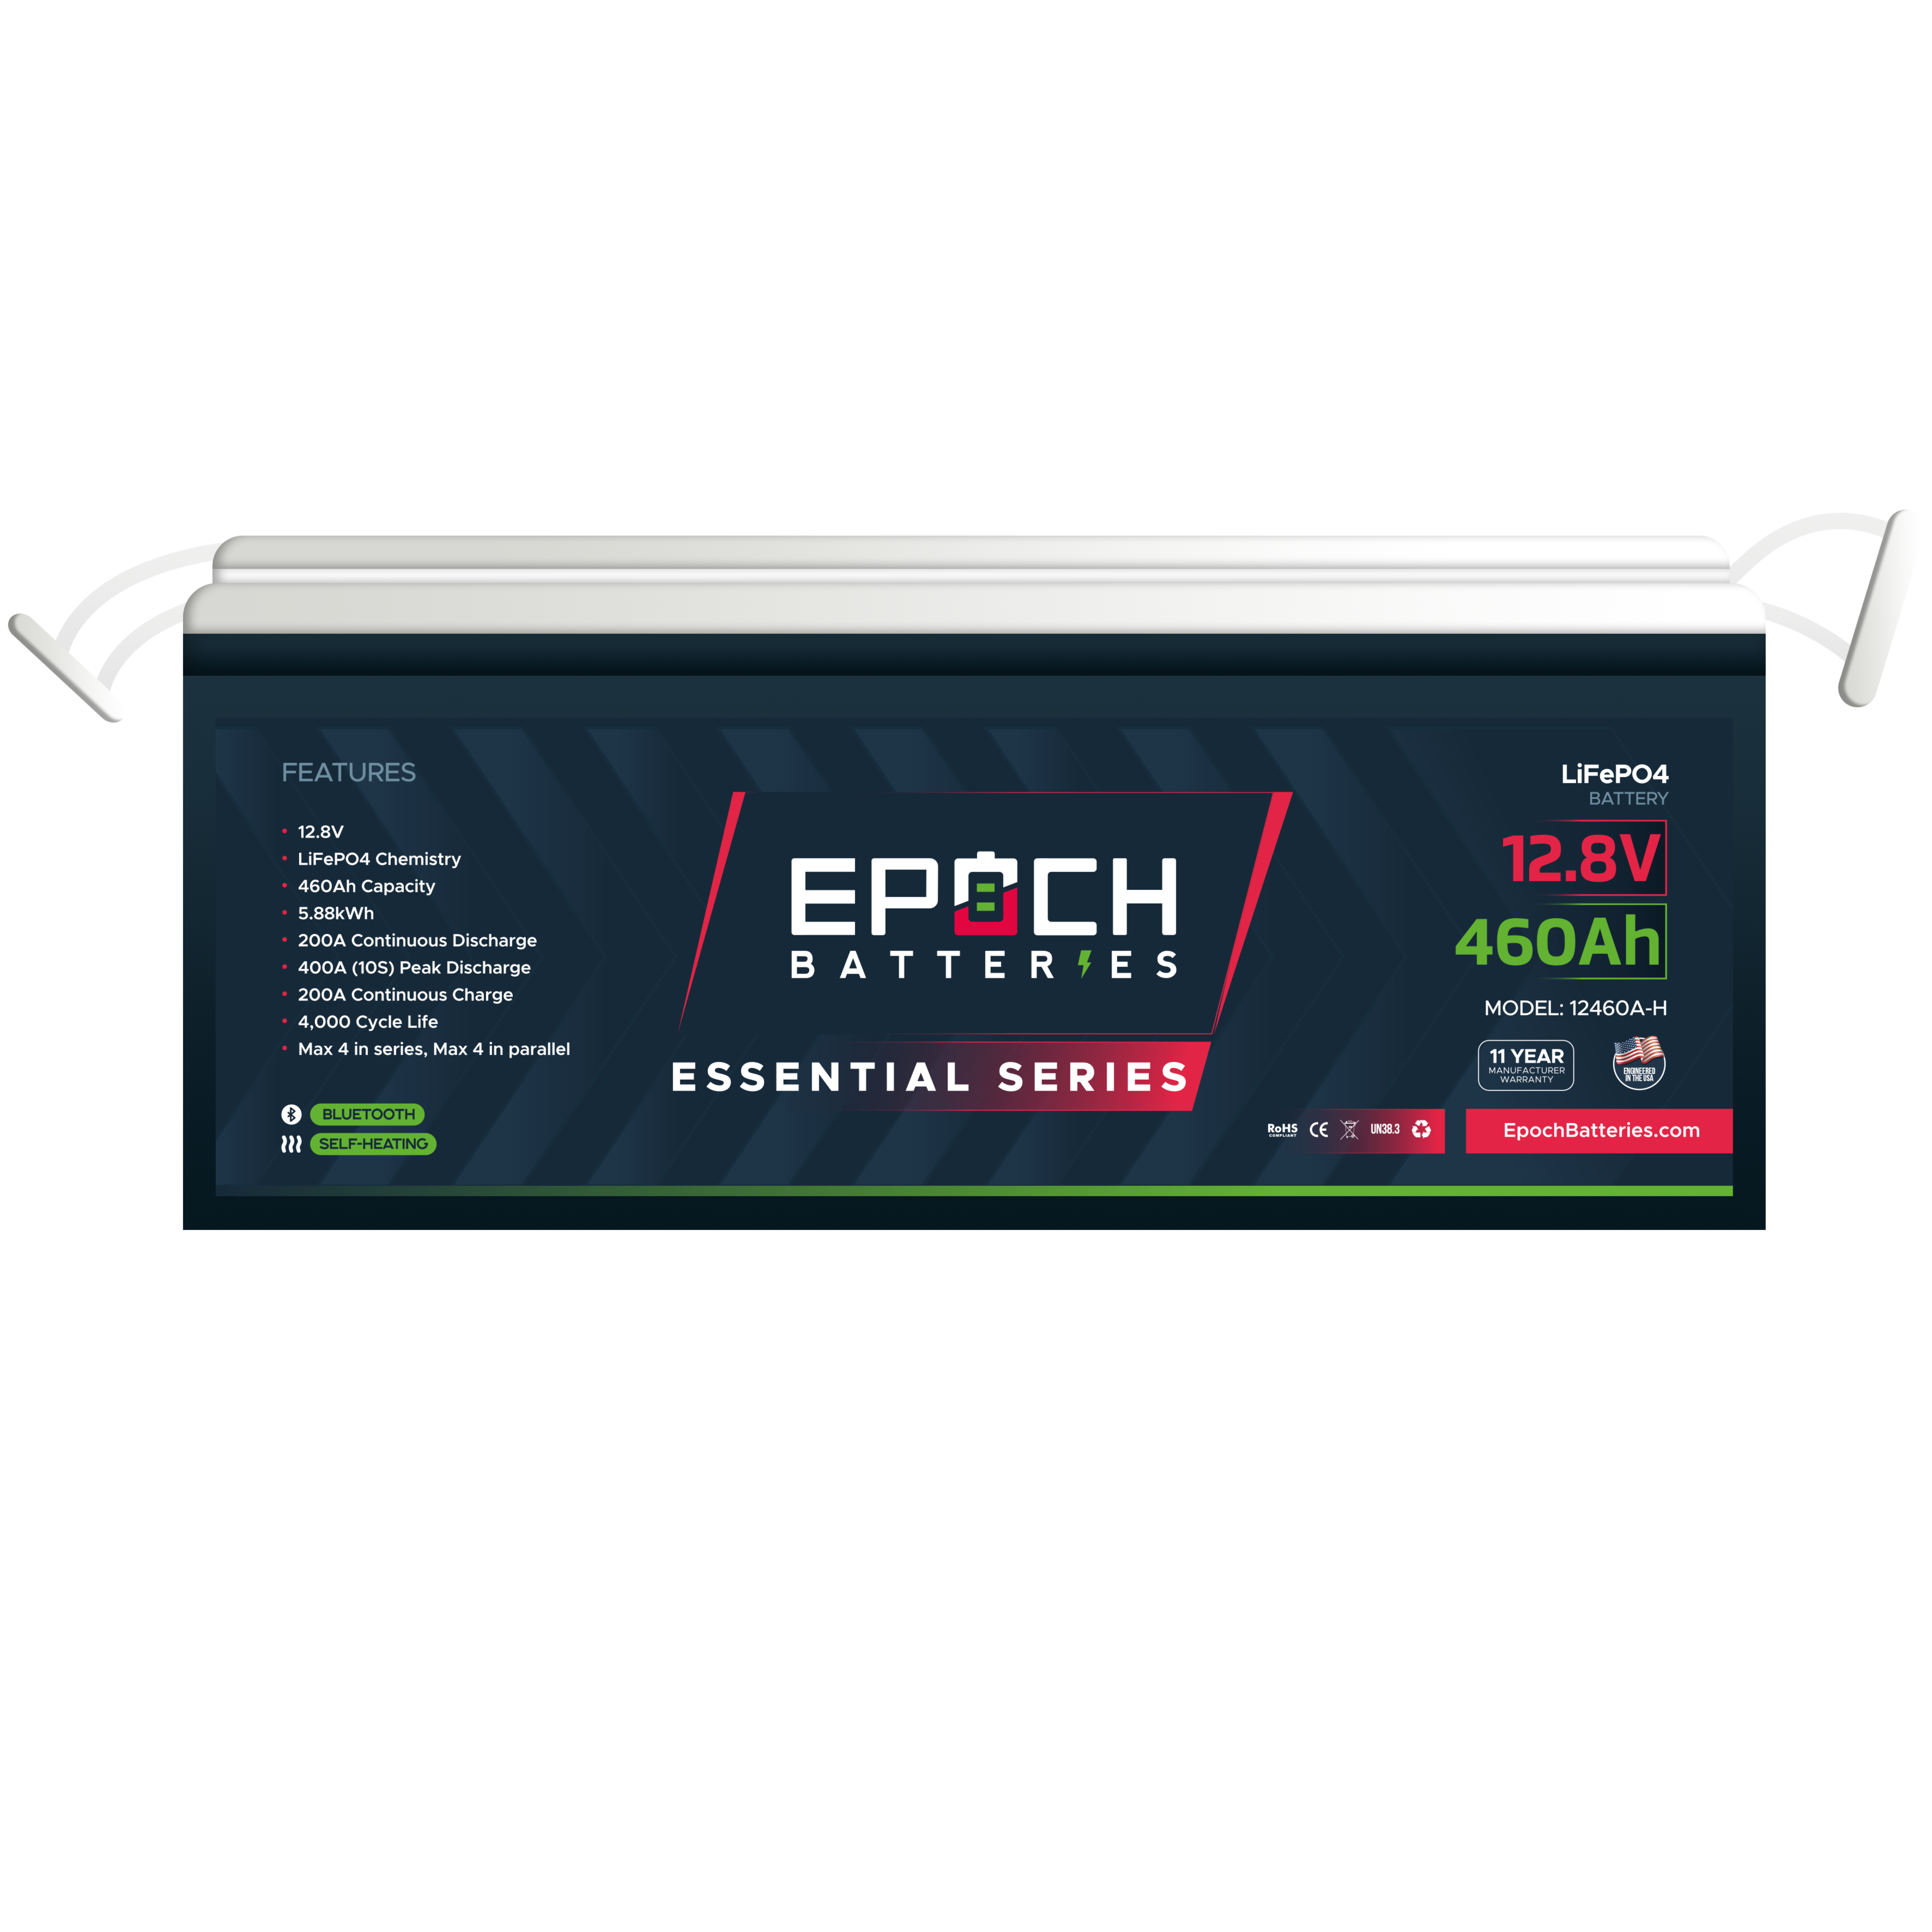 www.epochbatteries.com